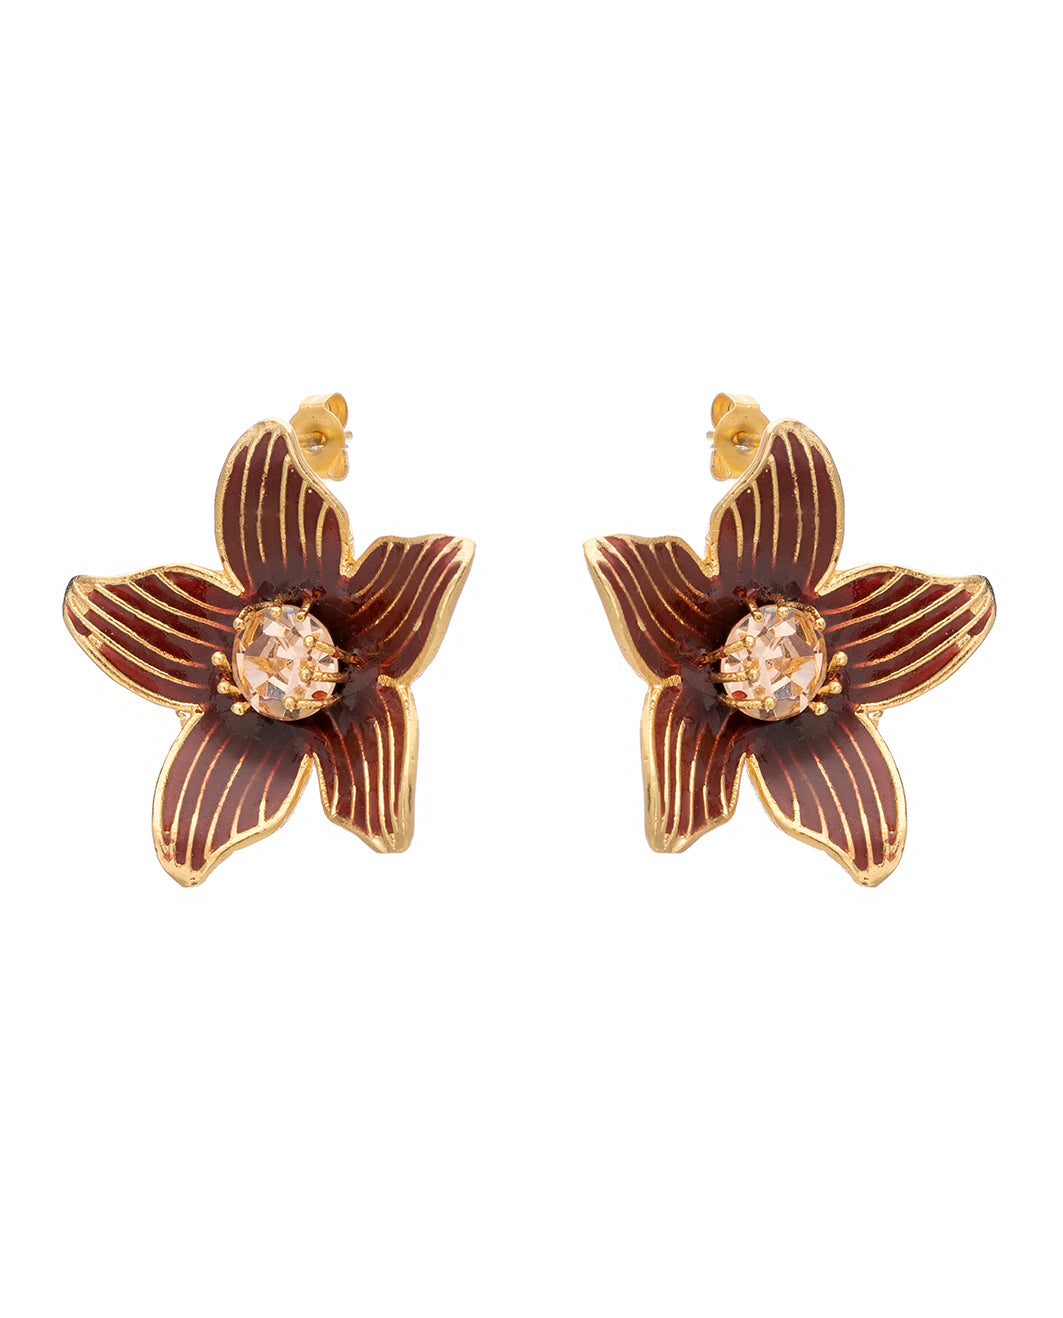 Floret earrings